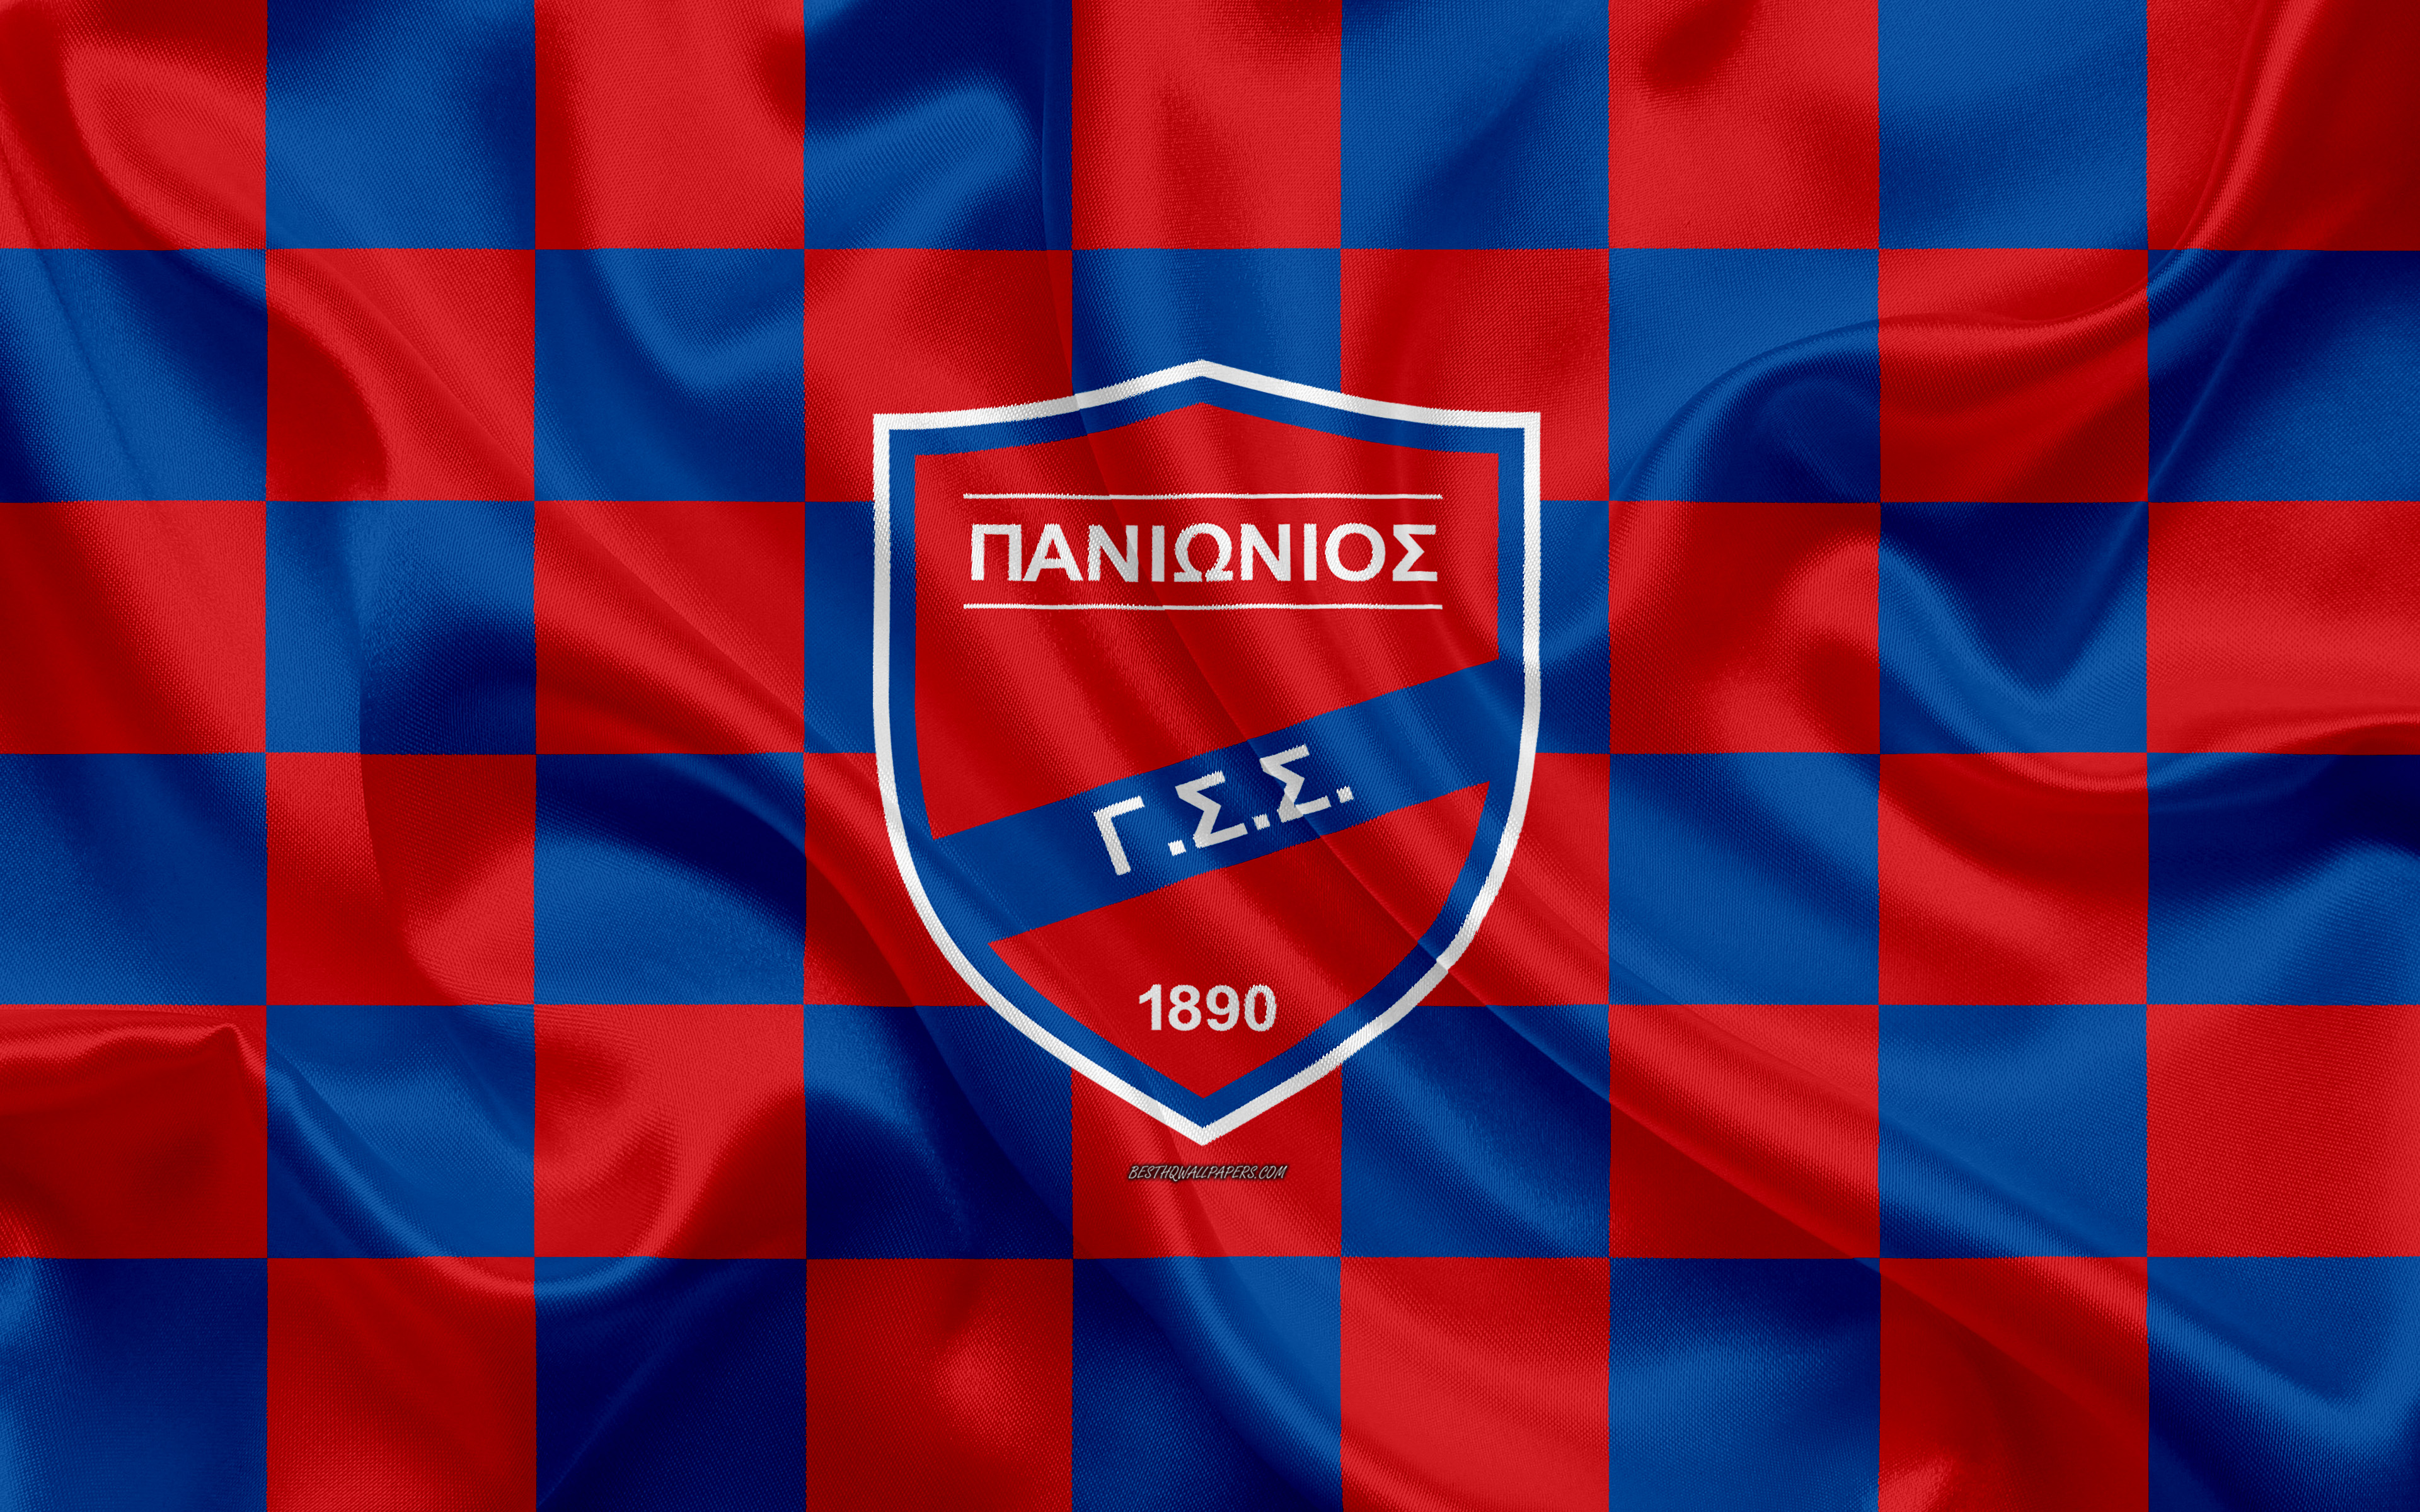 Panionios F.C. Wallpapers